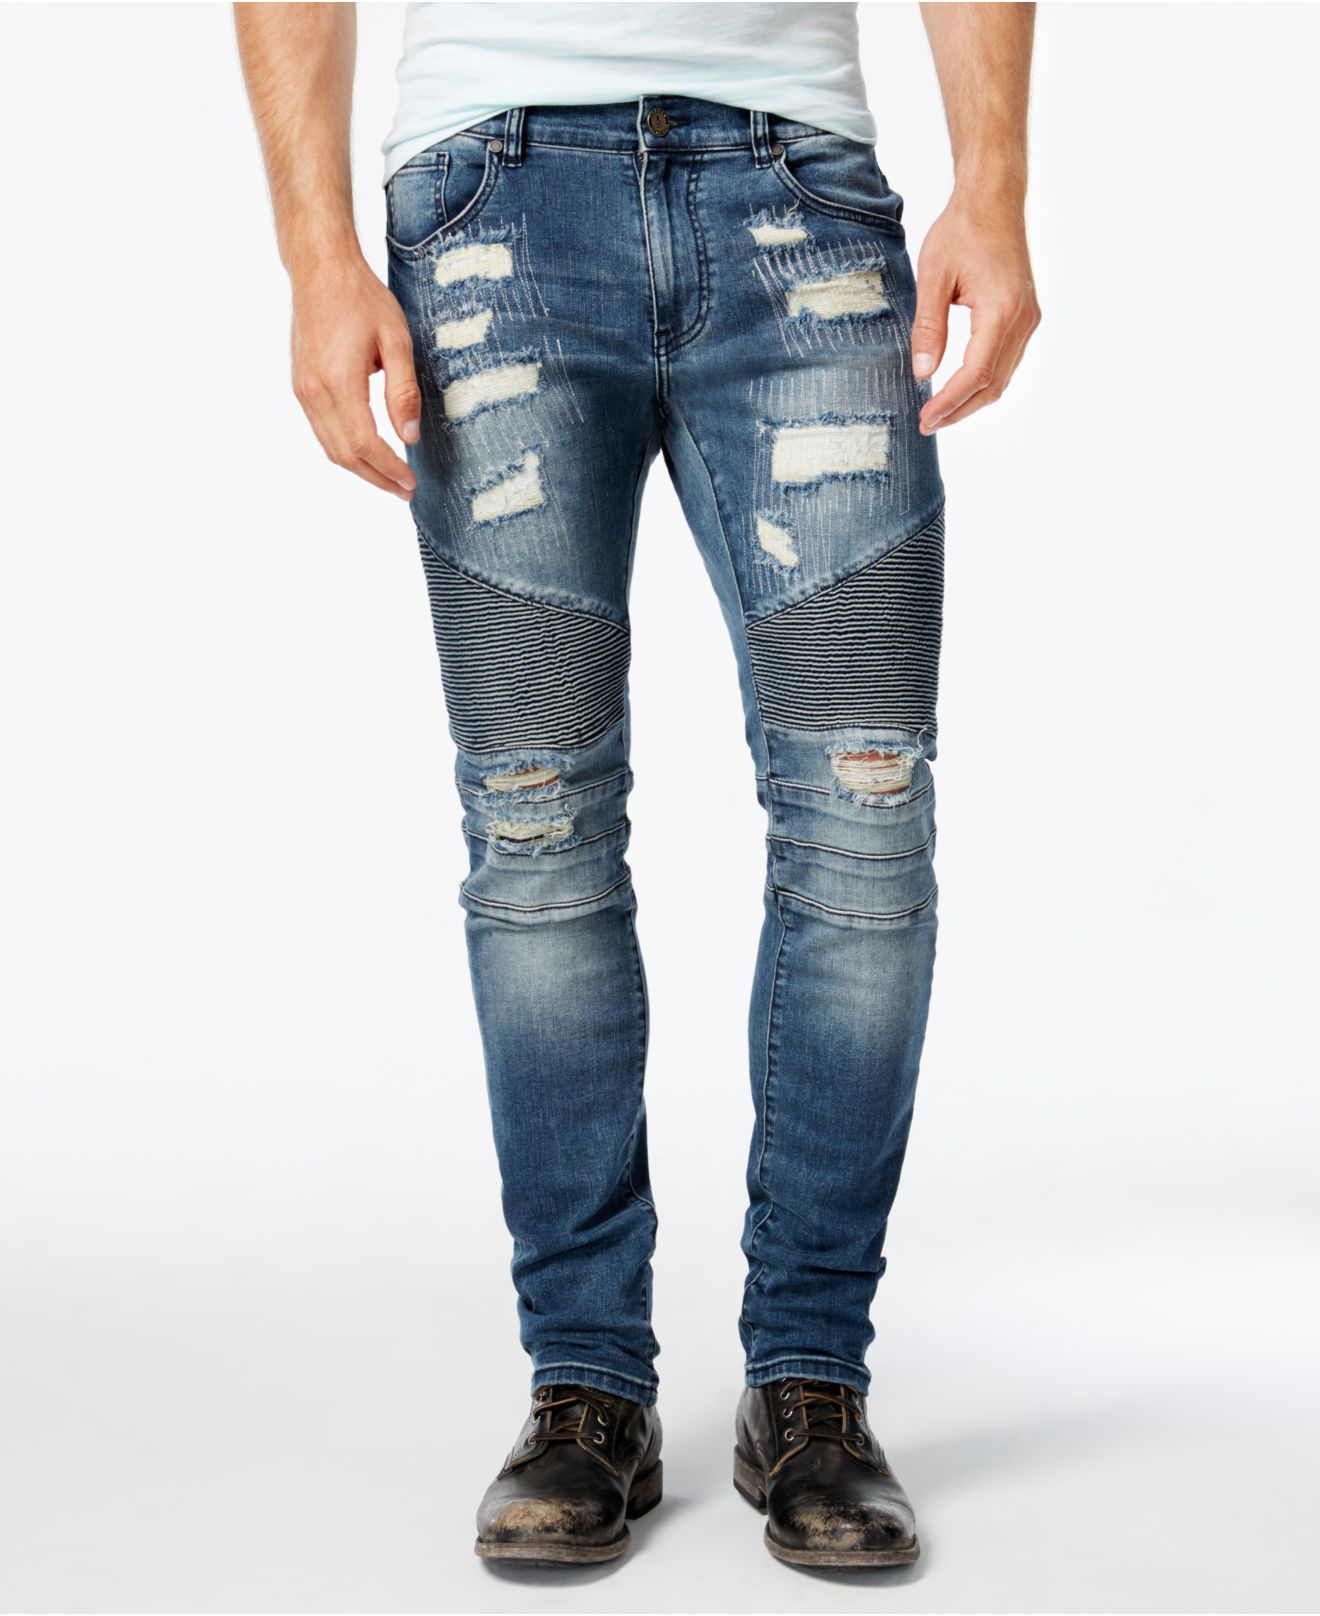 Lyst - Reason Men's Mulberry Moto Slim-fit Jeans in Blue for Men